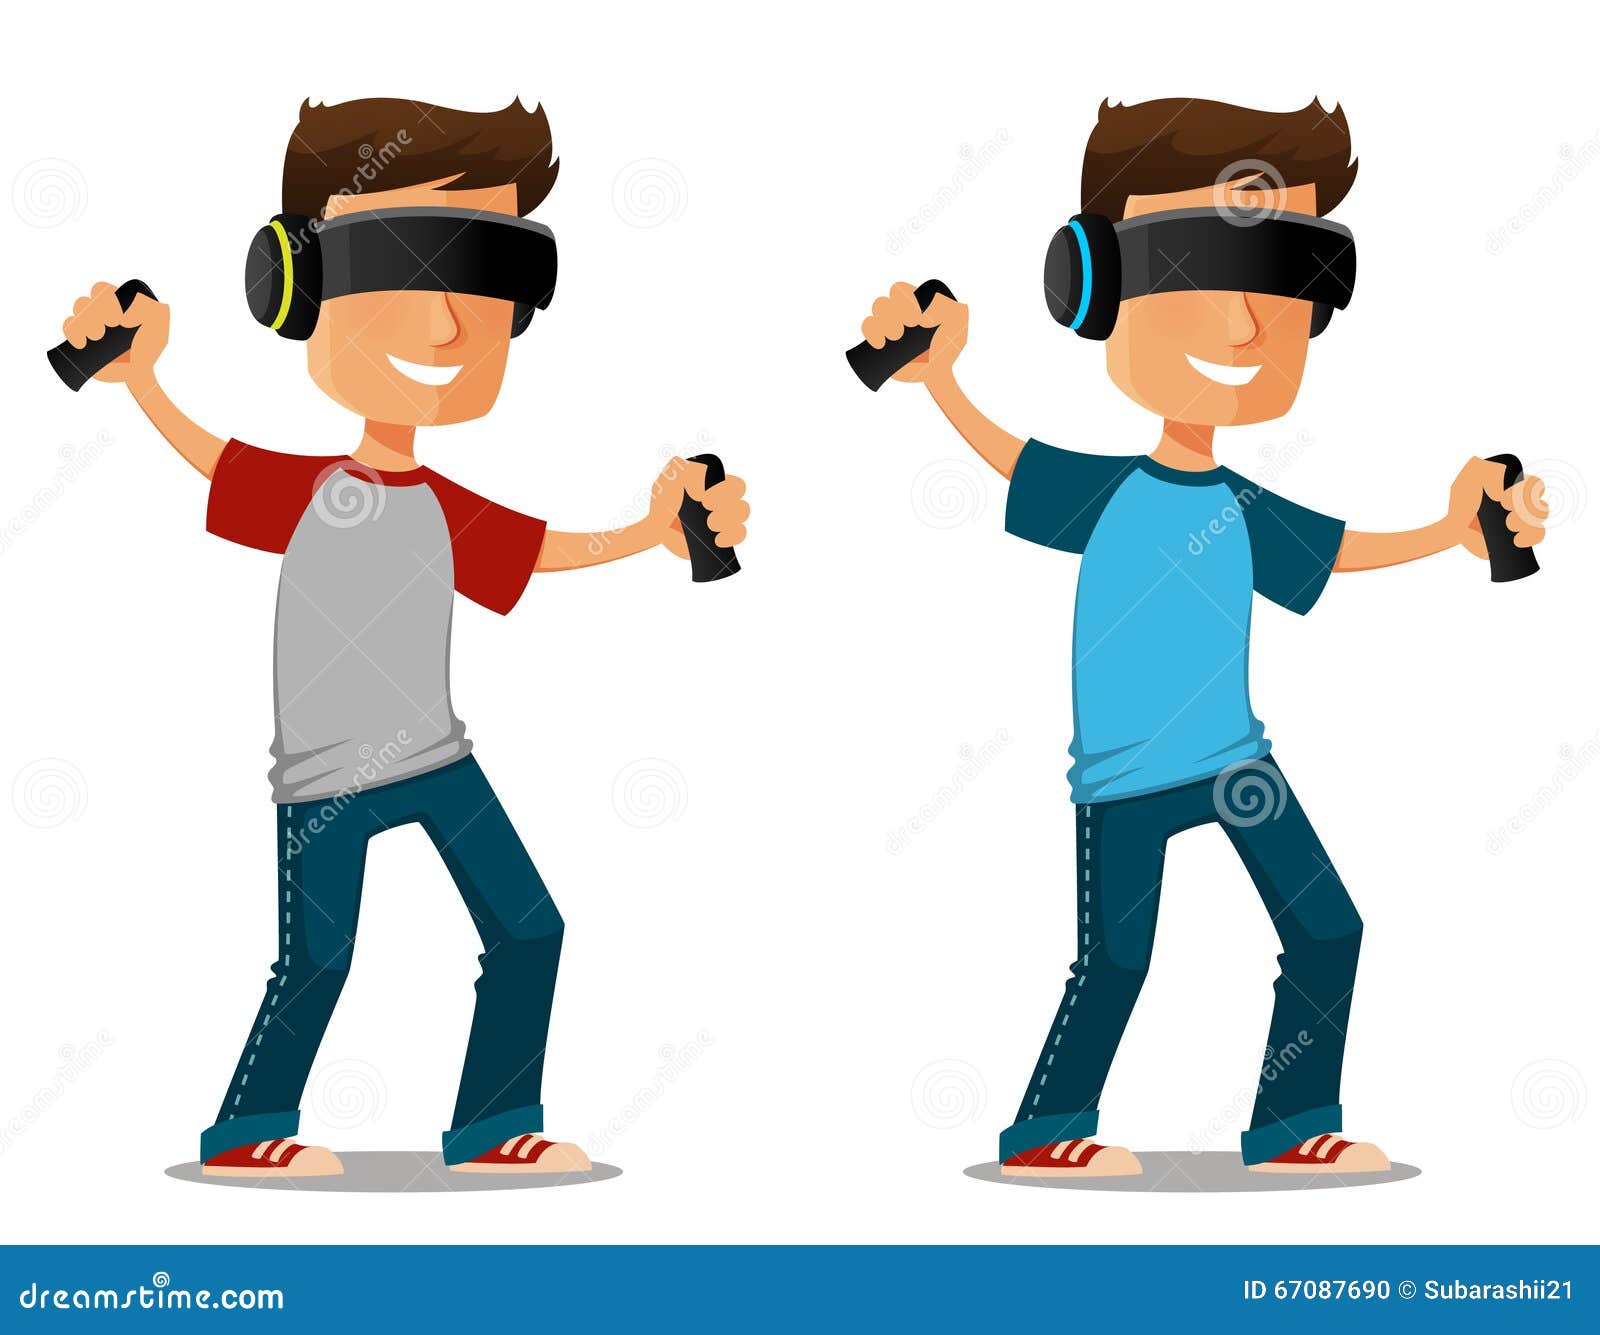 Cartoon Guy Using Virtual Reality Glasses Funny Stock Illustrations – 4  Cartoon Guy Using Virtual Reality Glasses Funny Stock Illustrations,  Vectors & Clipart - Dreamstime